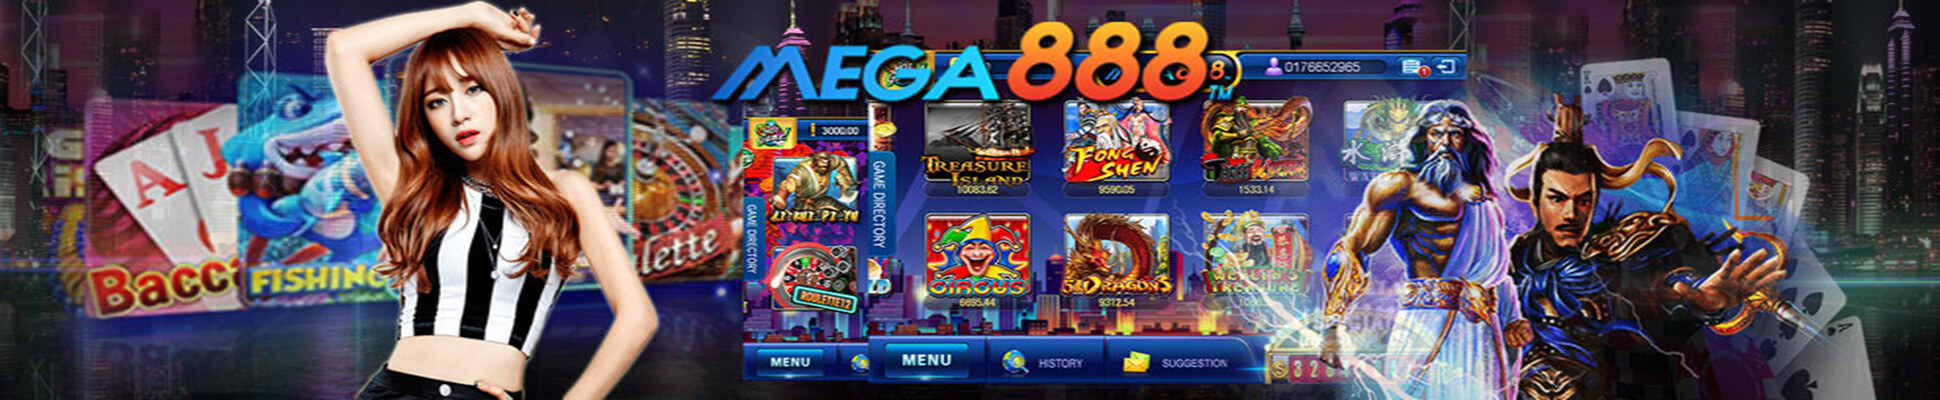 download slot game mega888